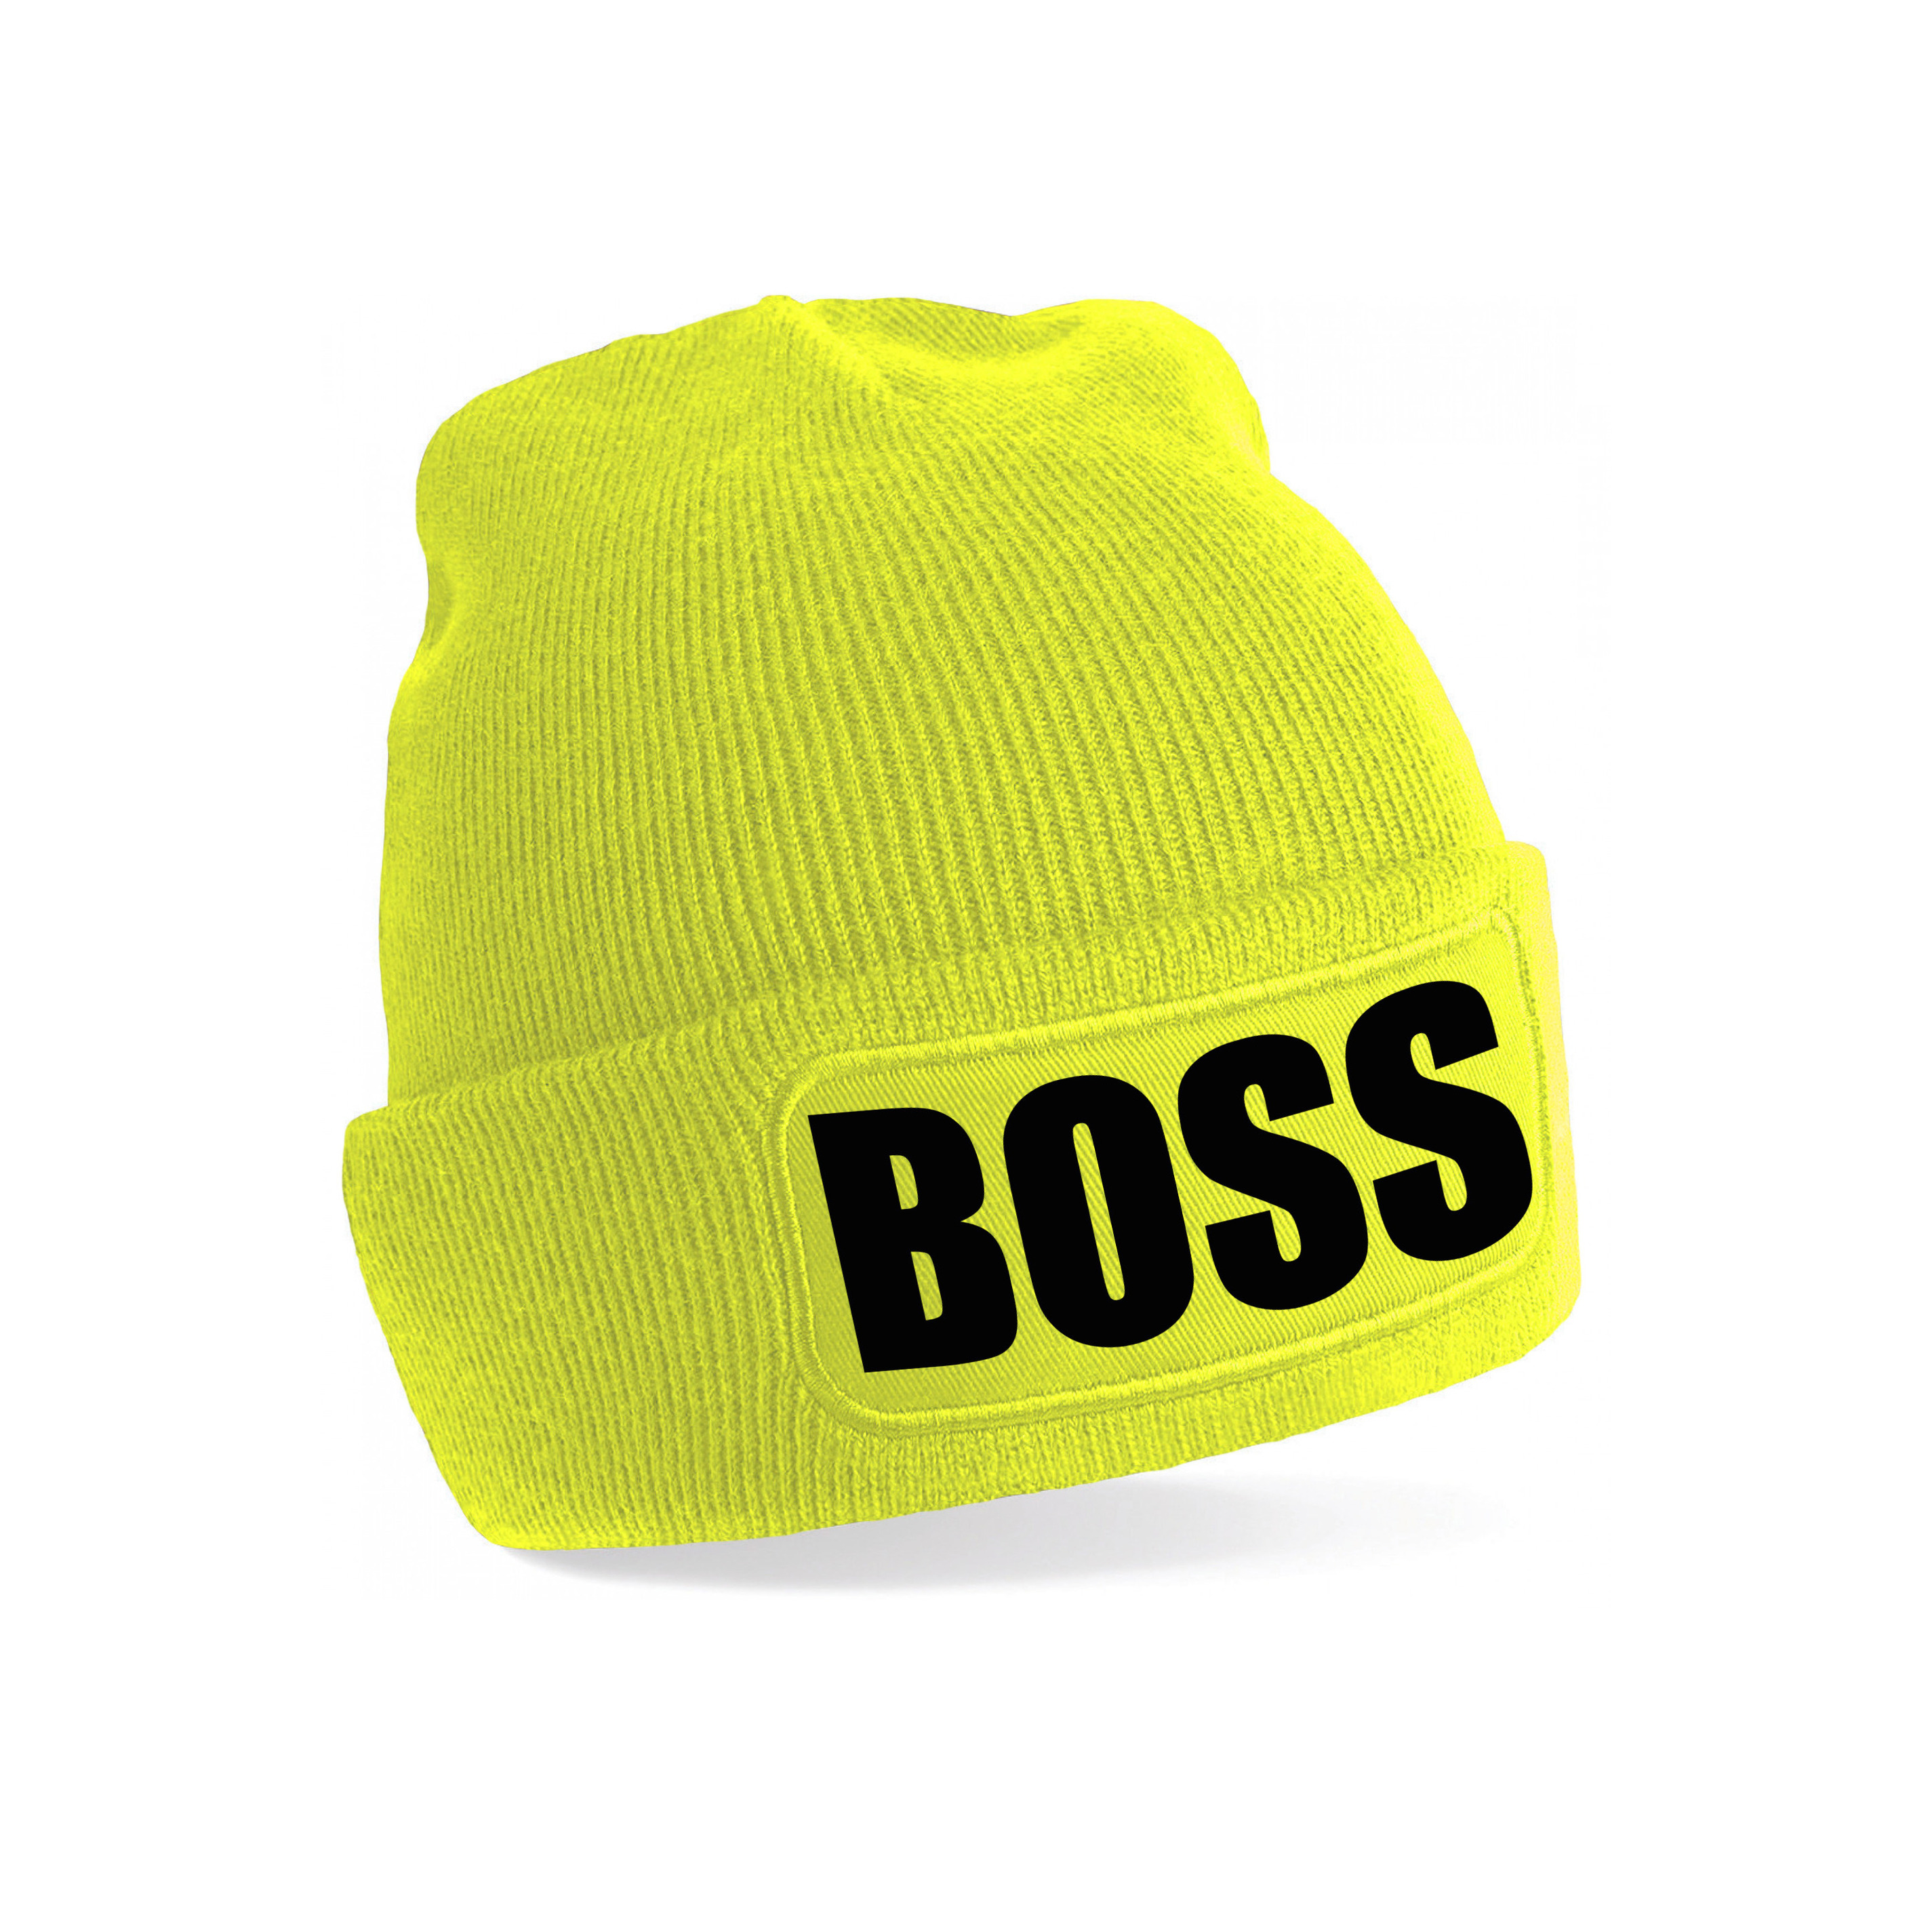 Boss muts-beanie onesize unisex geel